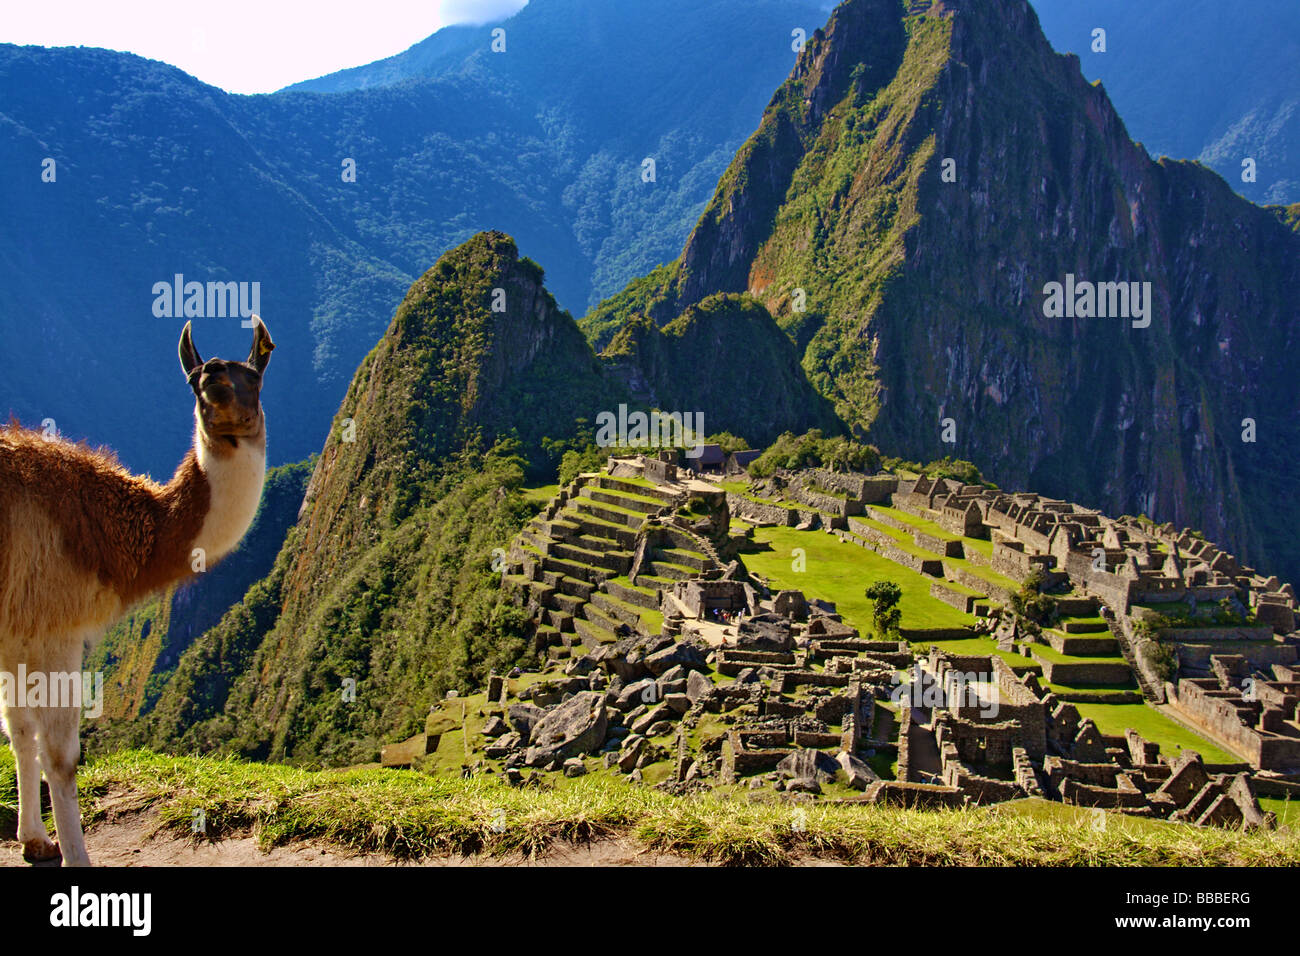 Lama am Machu Picchu Peru Südamerika Inka-Ruinen Stockfoto